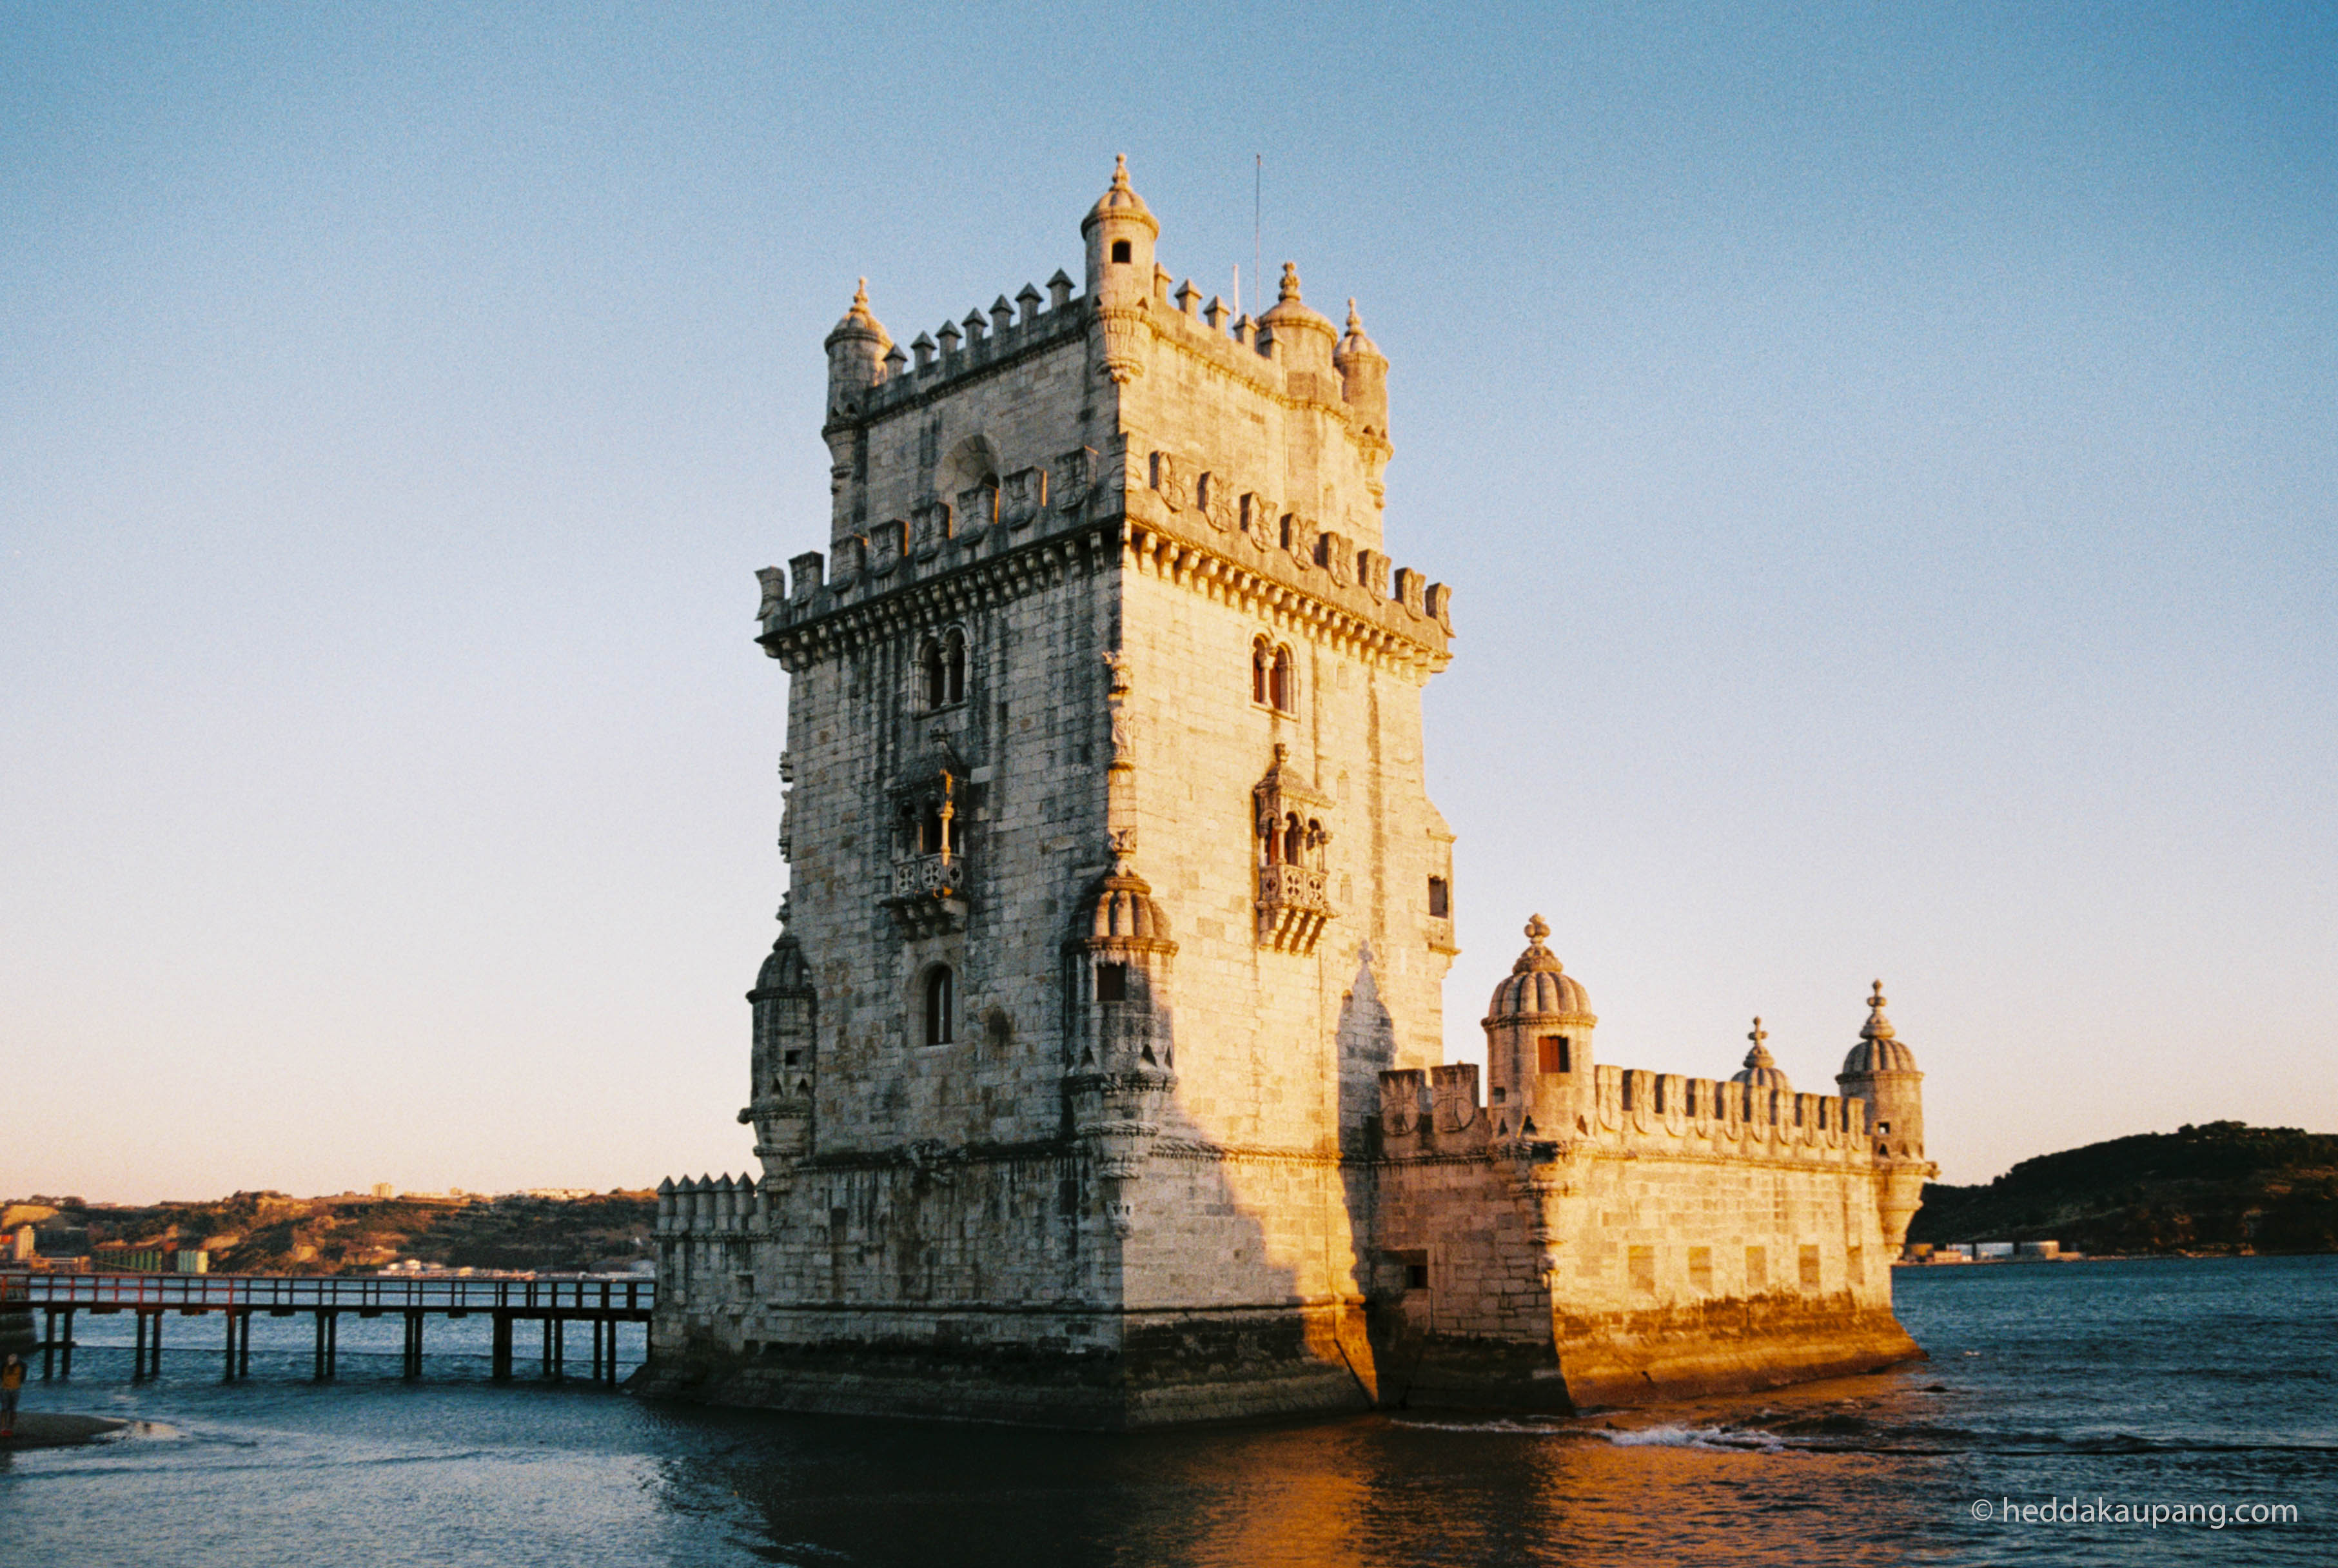 The beautiful Belém tower in Lisbon